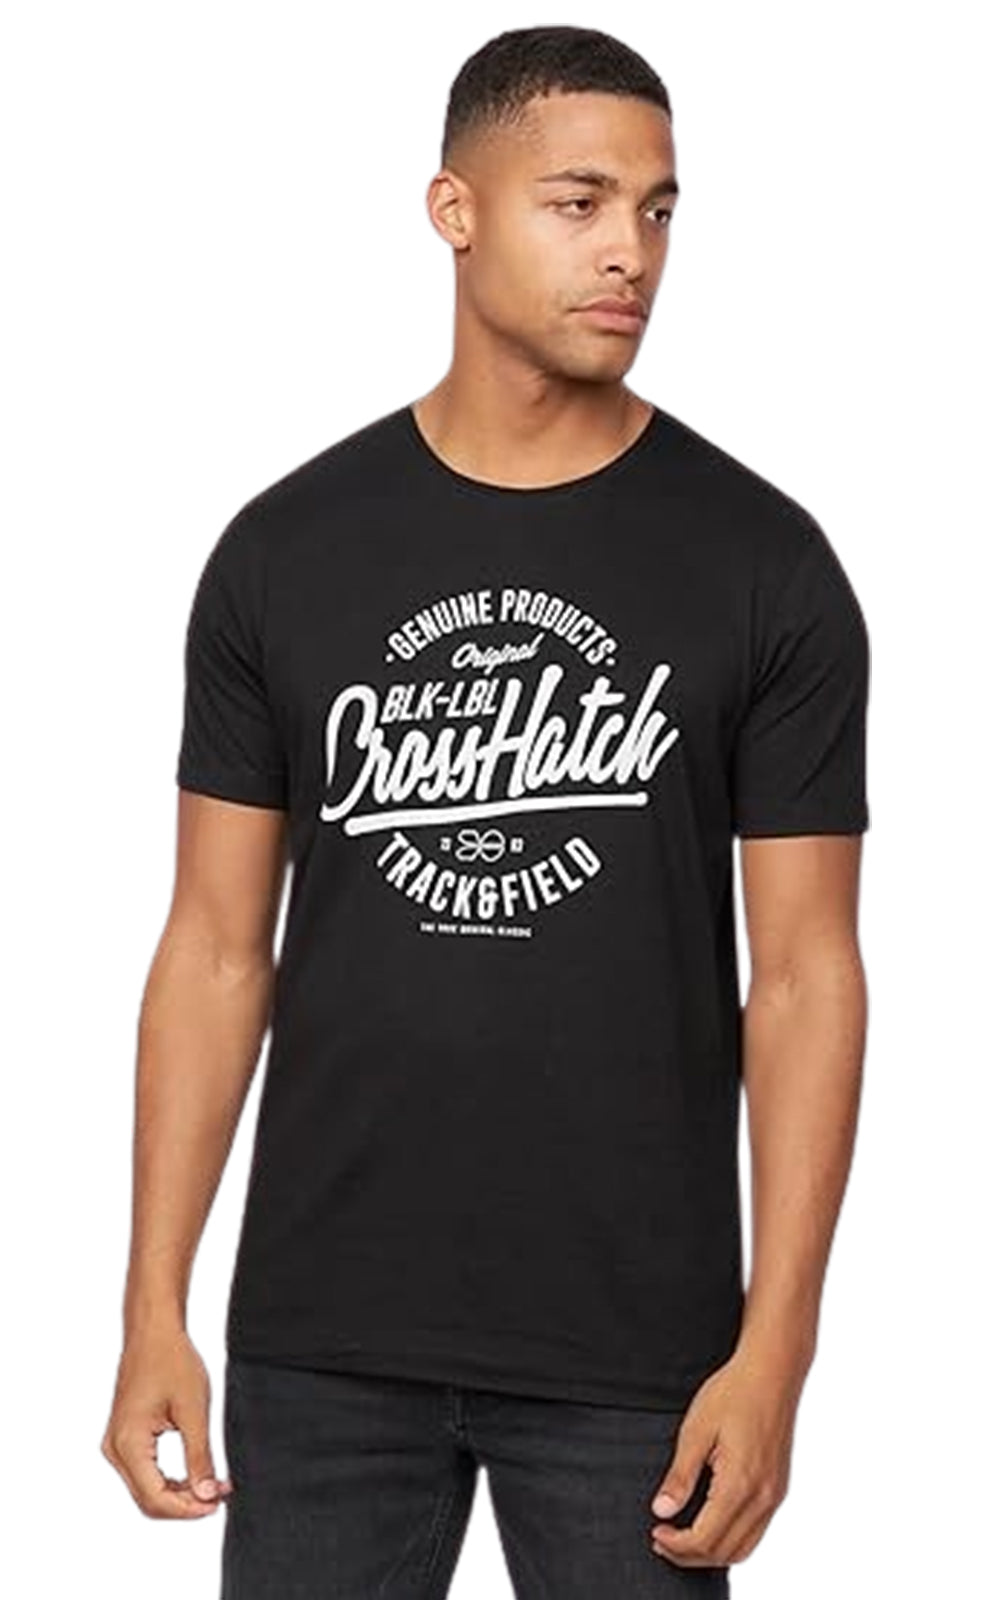 Crosshatch 5Pack Men's T-Shirt